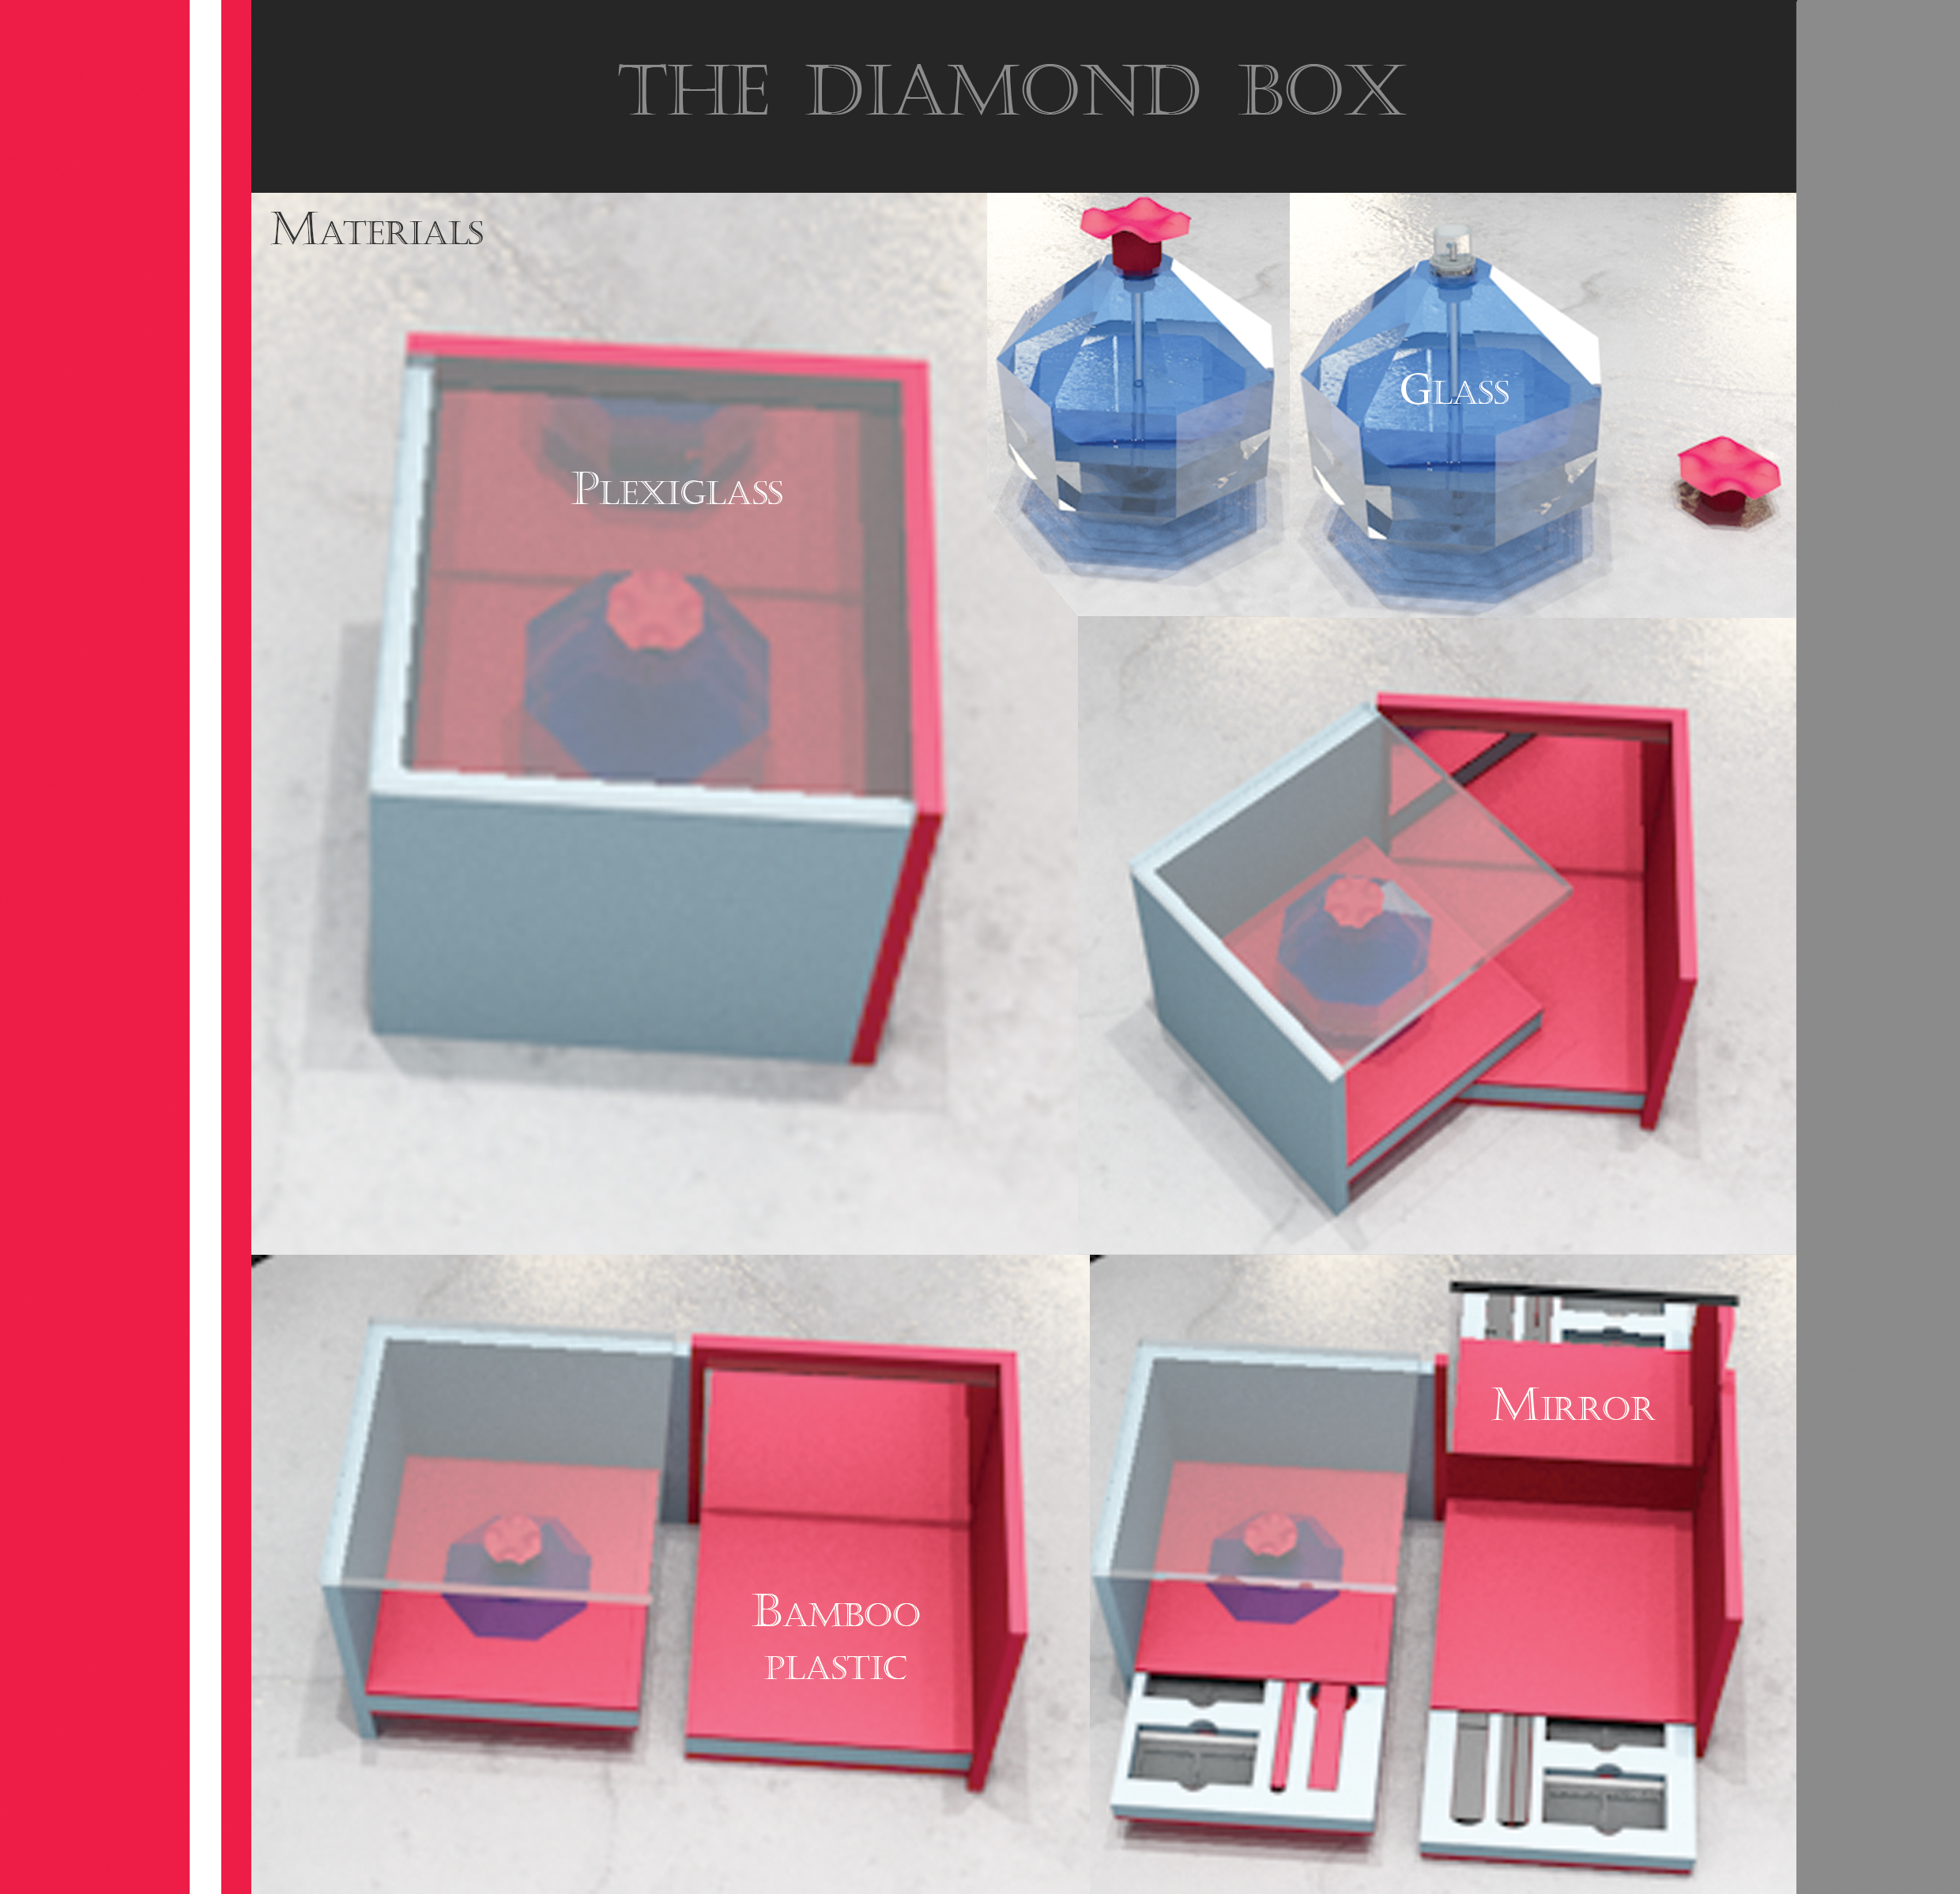 The diamond box by Ardami Martha - Creative Work